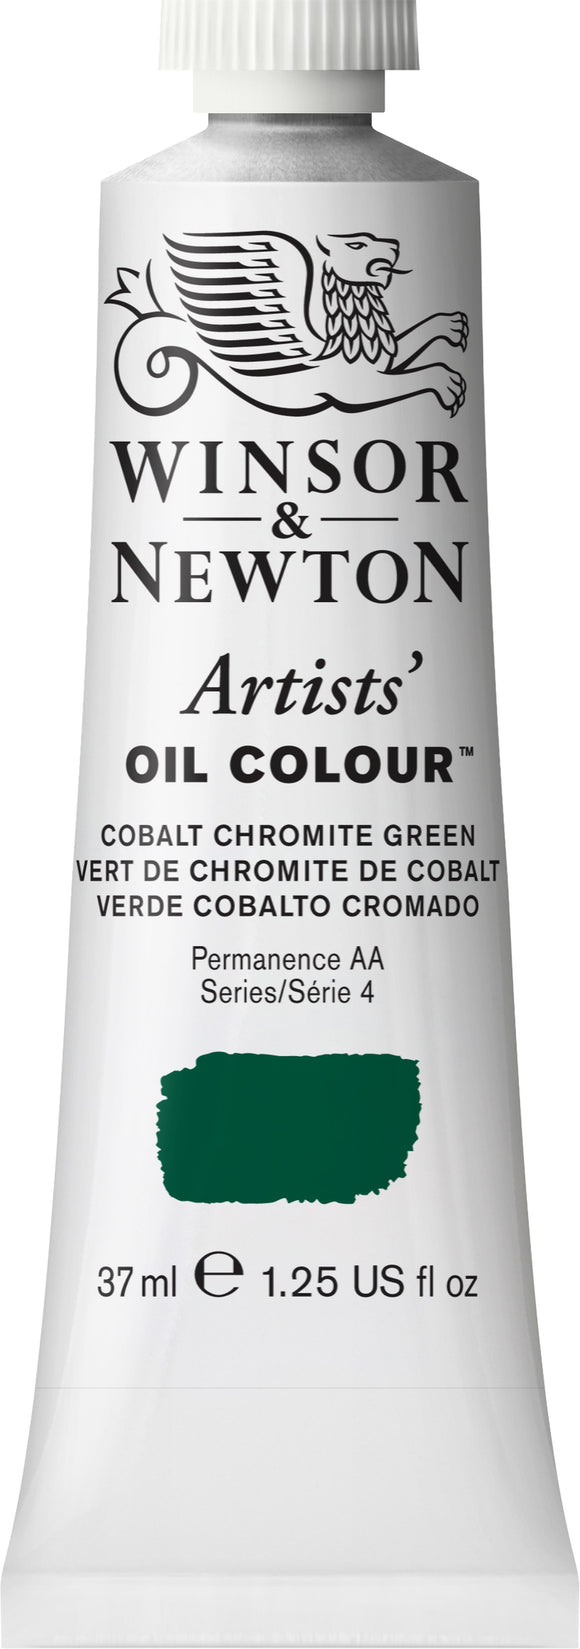 Winsor & Newton Artists Oil Color Cobalt Chromite Green 37Ml